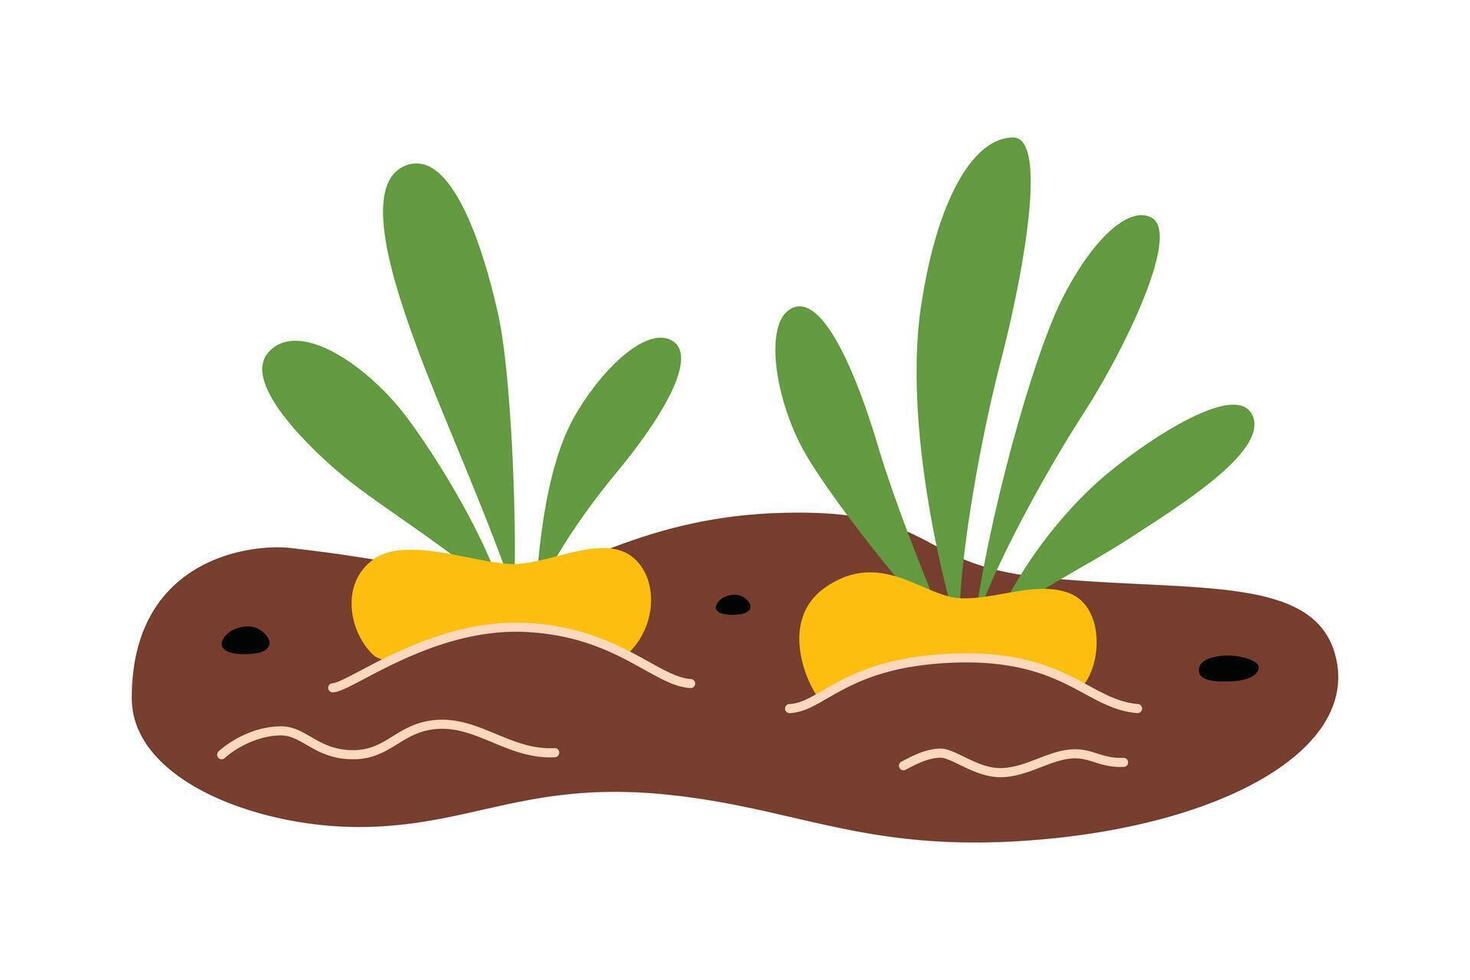 Garden bed with turnip, farming illustration, growing vegetables, radish icon, harvesting beet, spring gardening, planting food, vegetarian concept, plants in soil vector